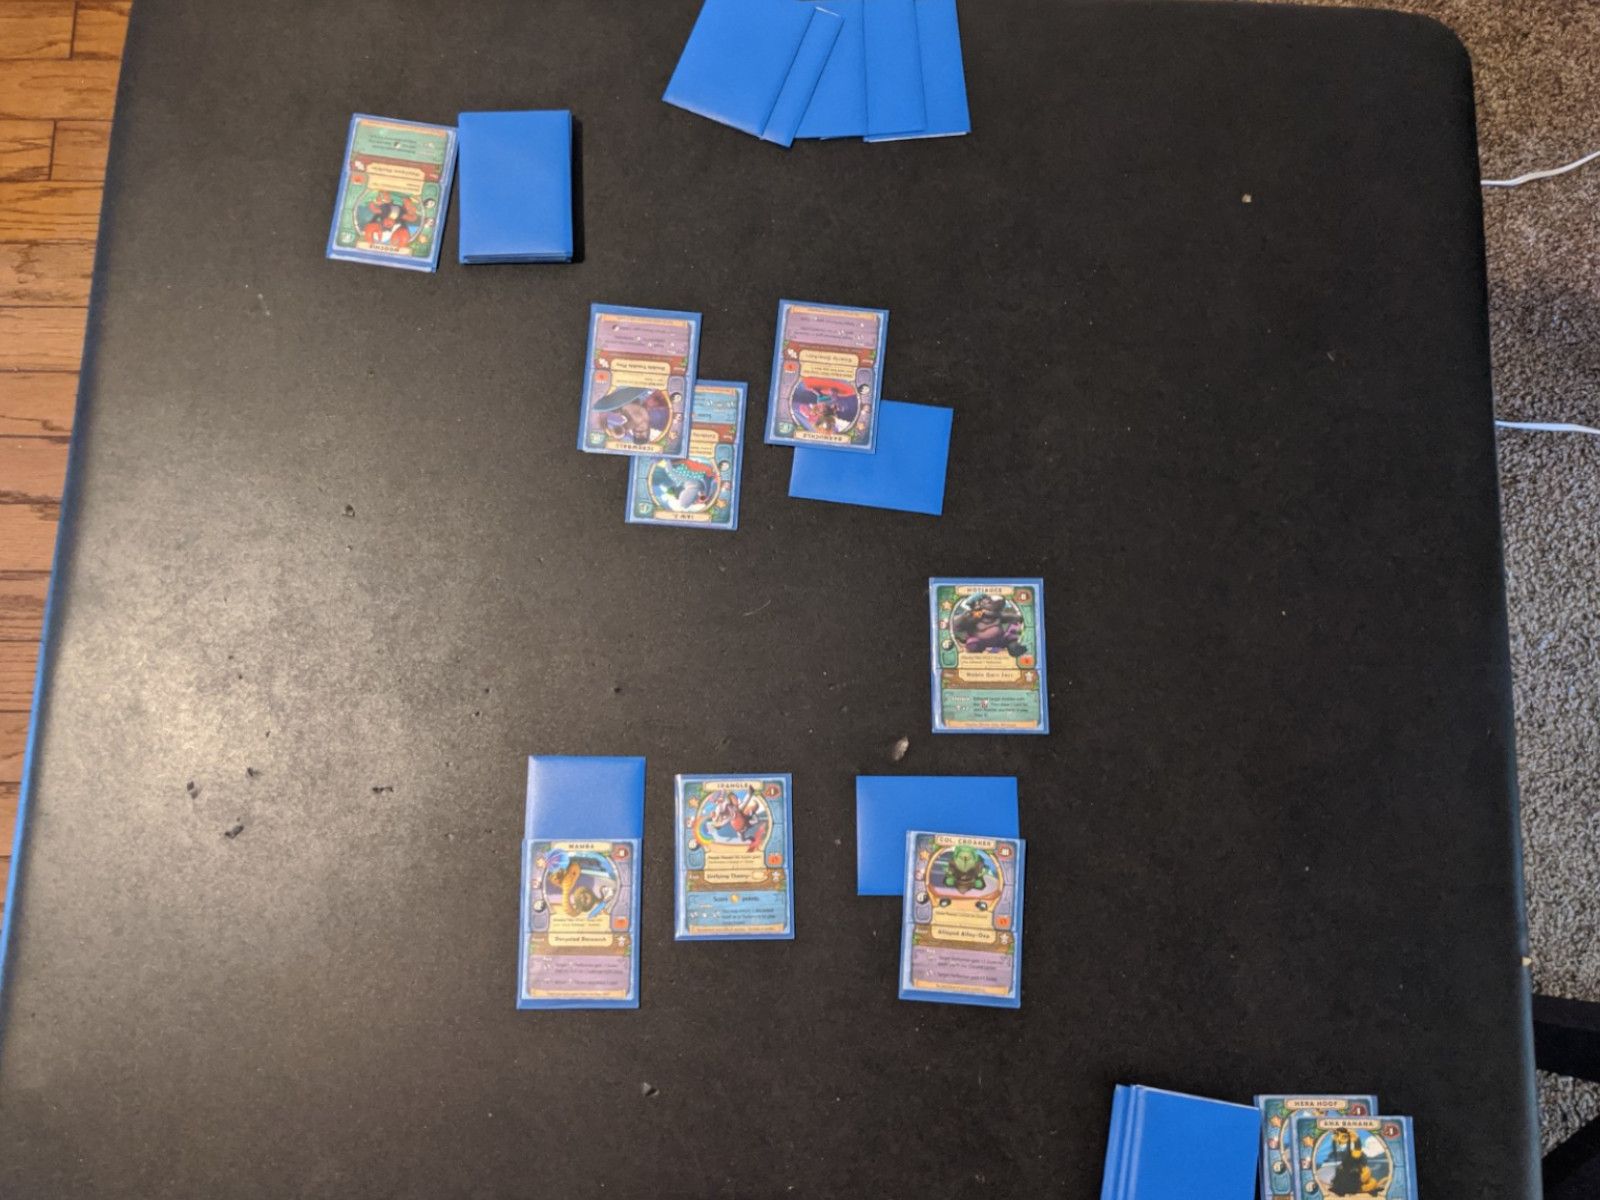 New Card Game Shaka Shredders Has Magnetic Personality But Too Many Mechanics